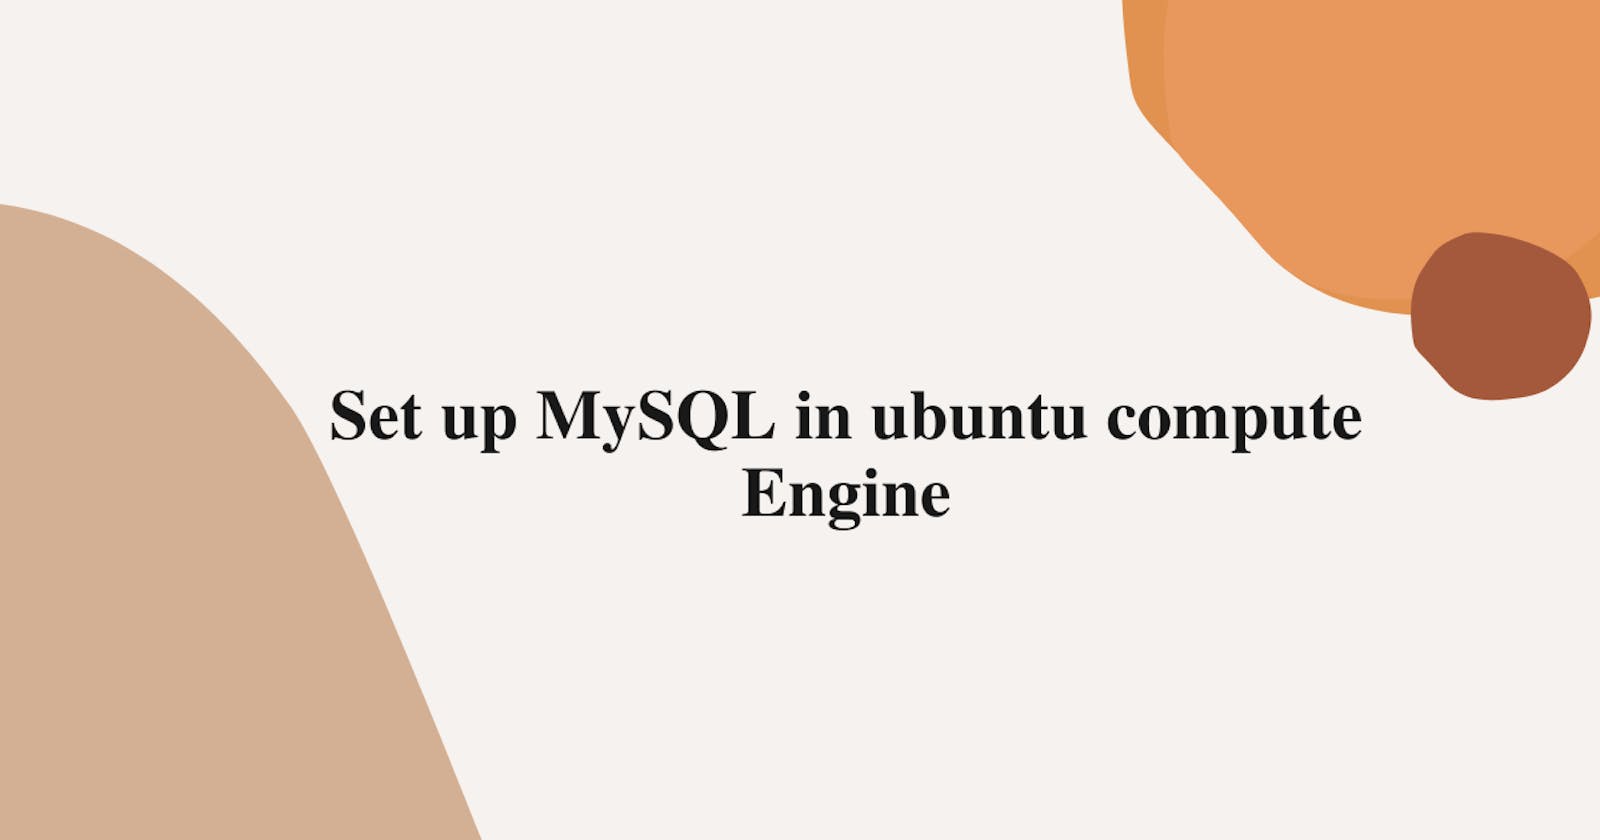 Set up MySQL in ubuntu compute Engine